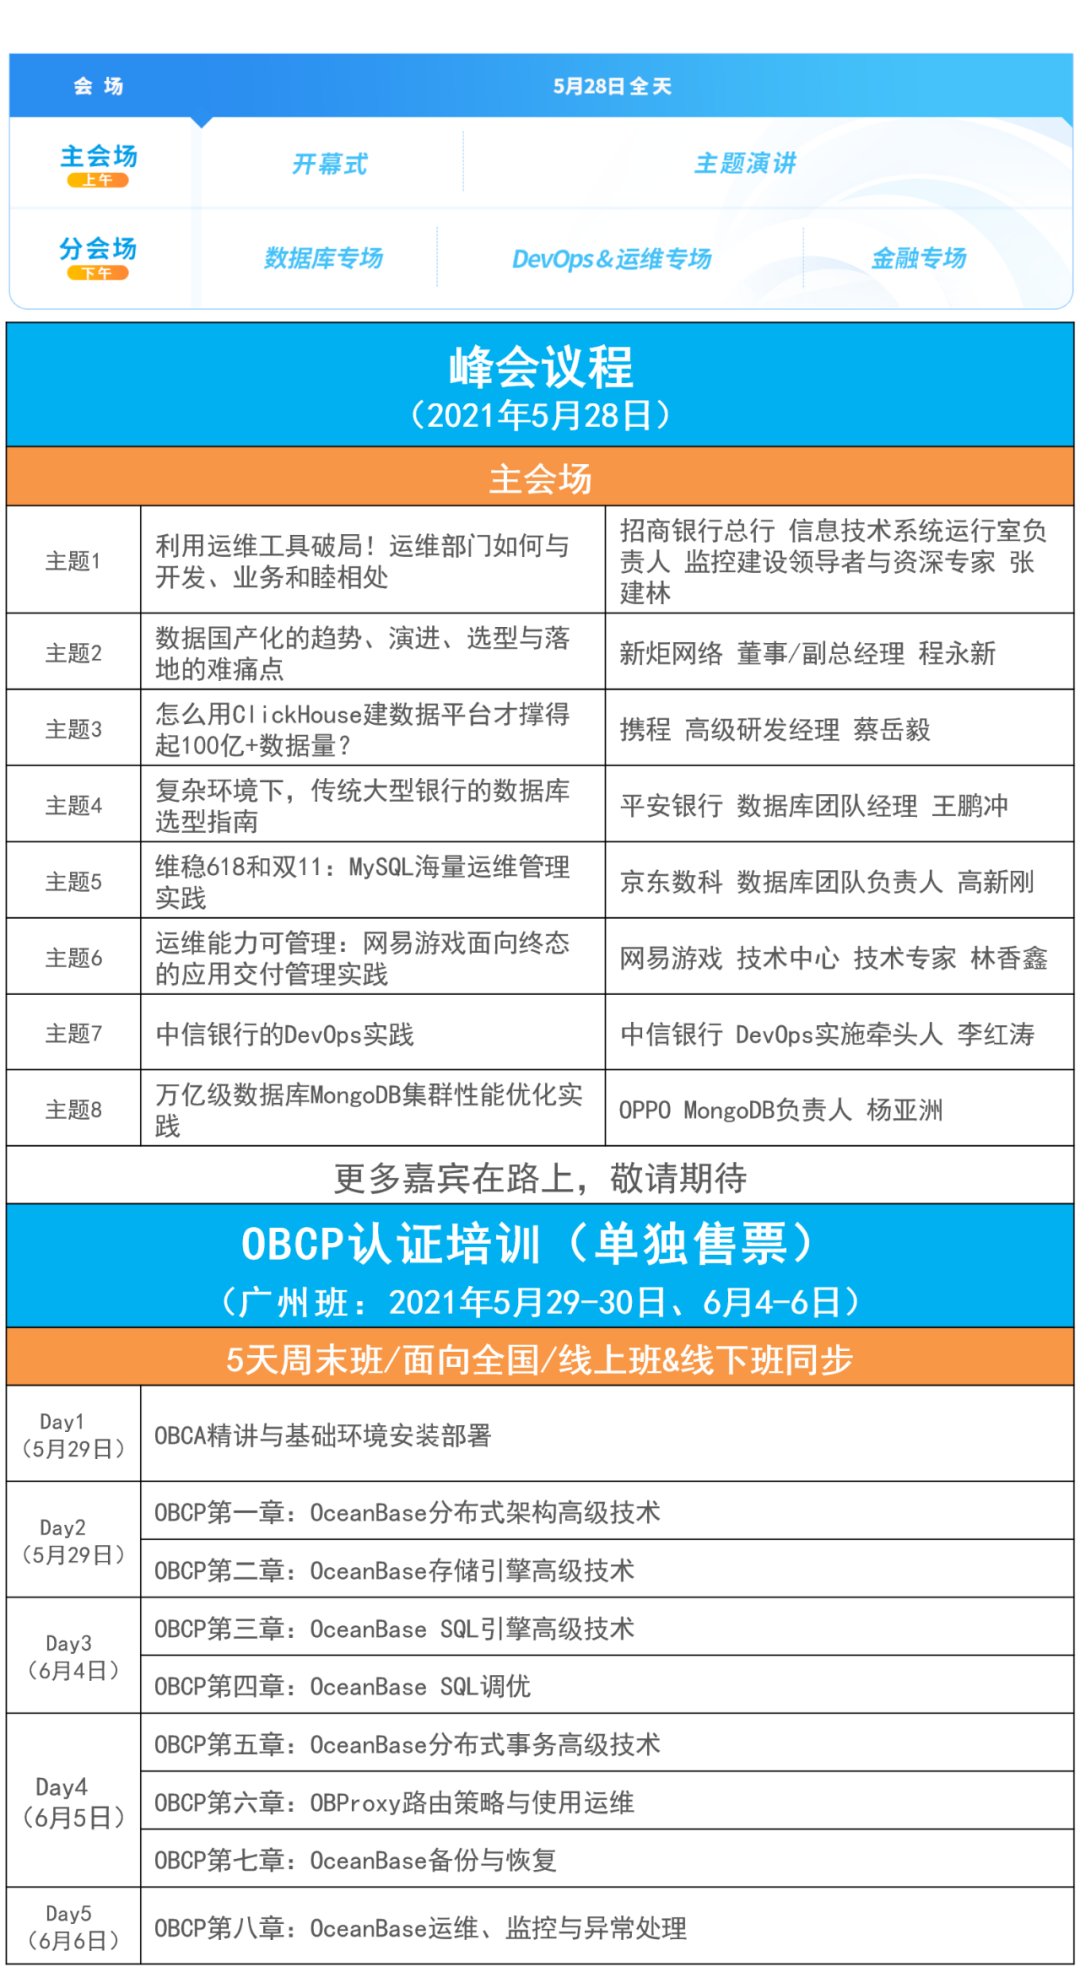 Gdevops广州站：组织能力提升的DevOps如何实现